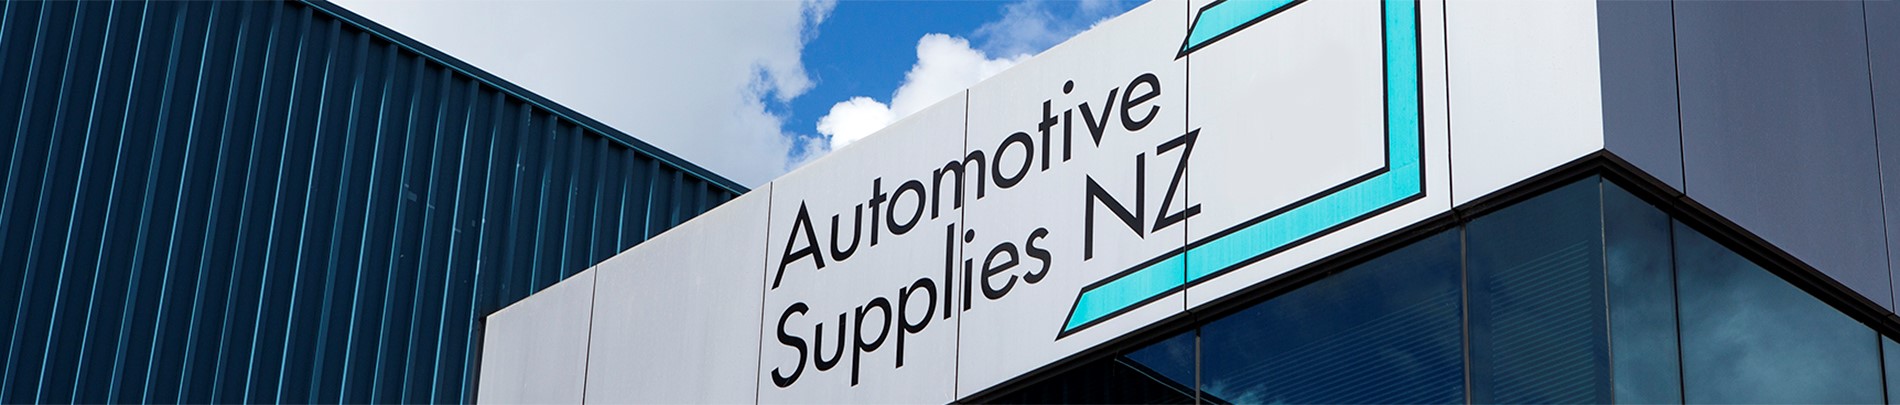 Automotive Supplies New Zealand